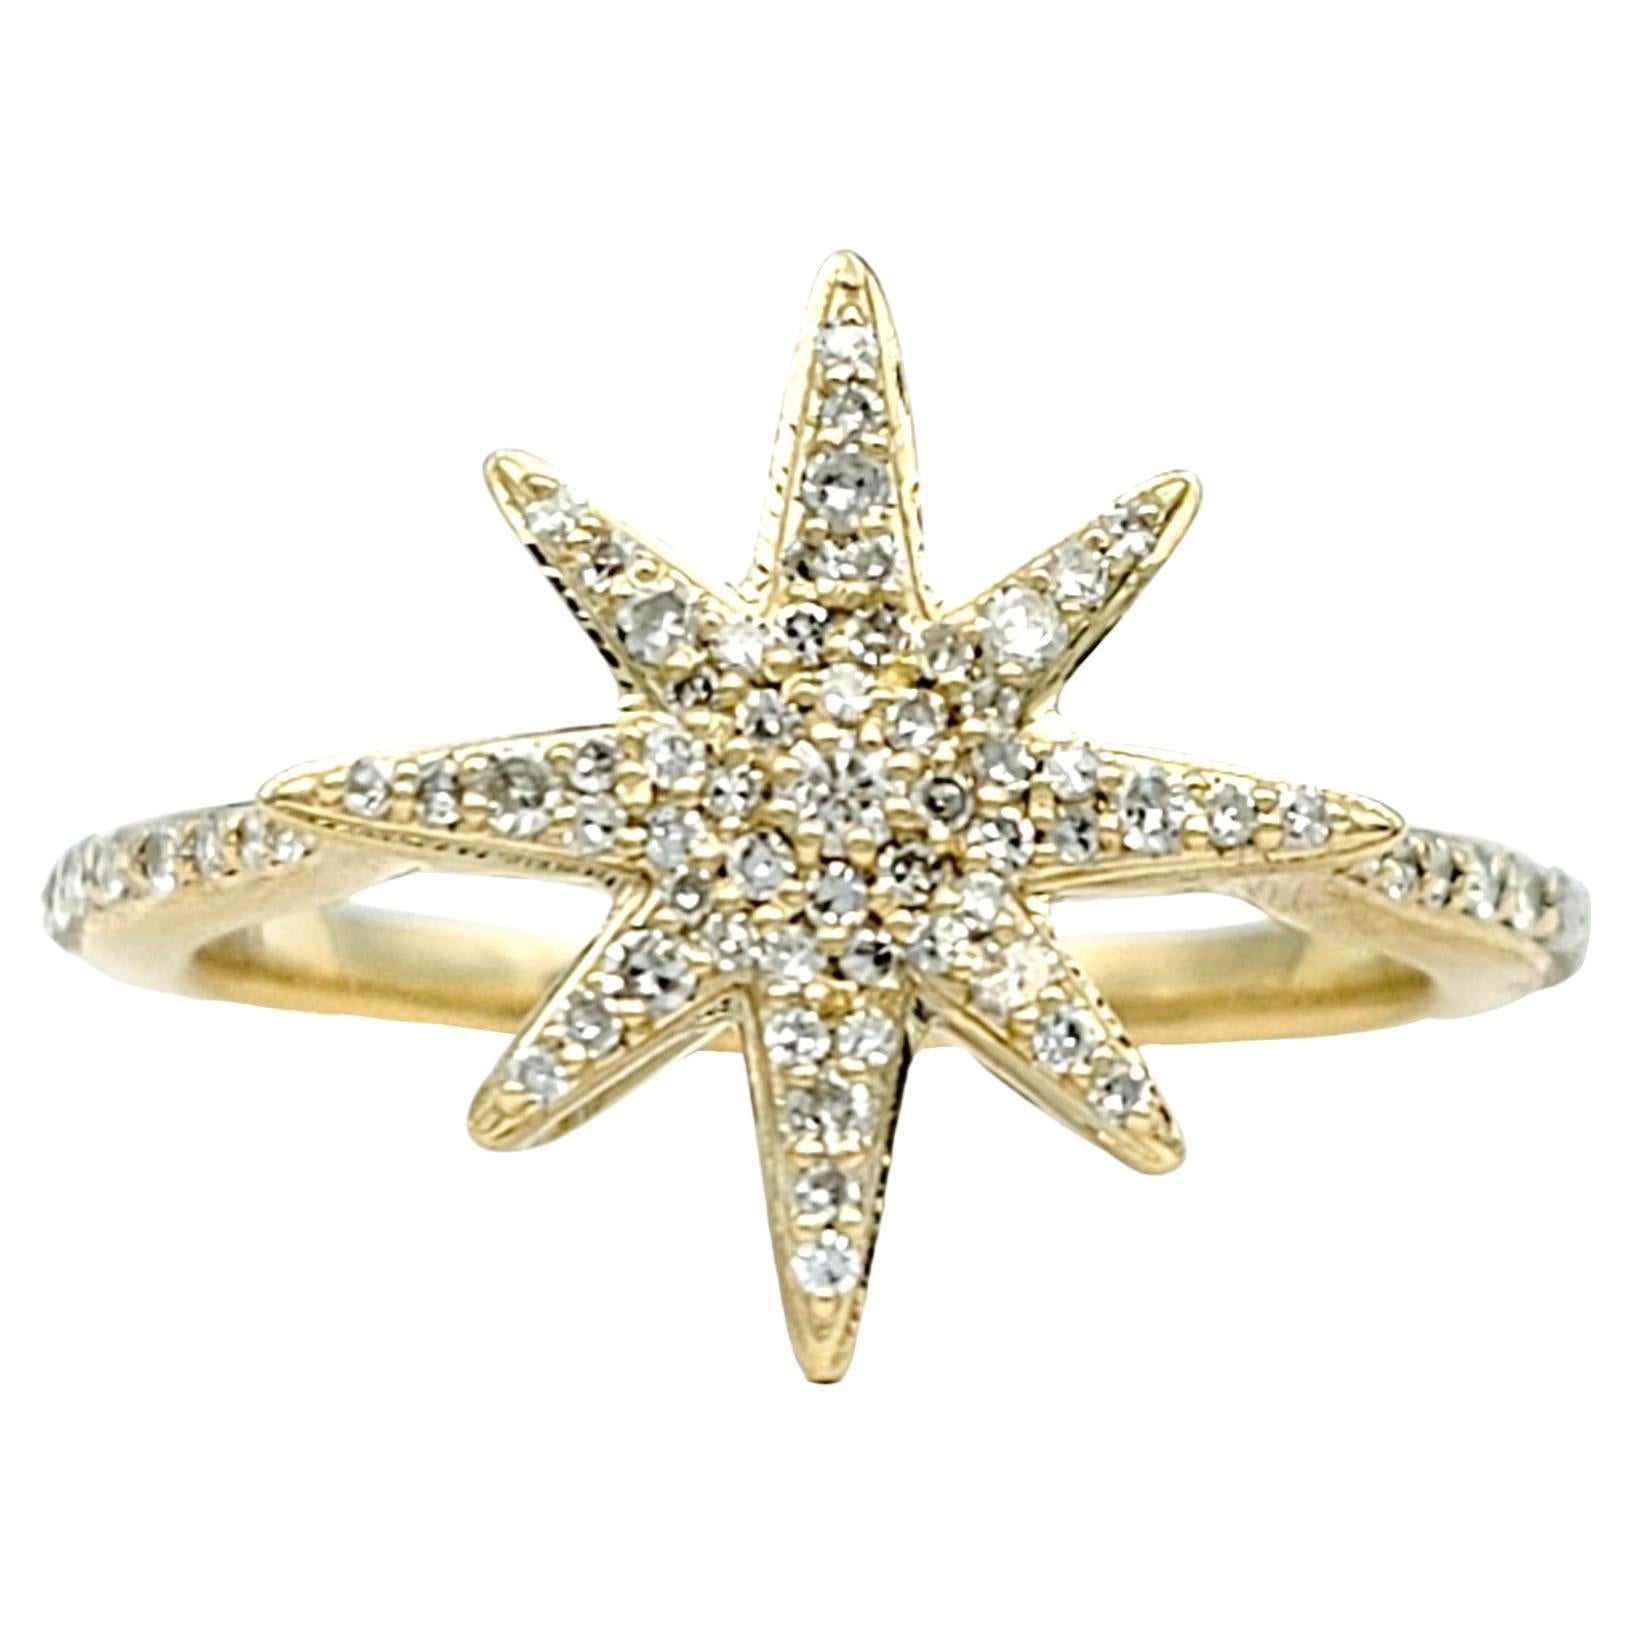 Pavé Diamond 8-Point Star Motif Band Ring in Polished 14 Karat Yellow Gold